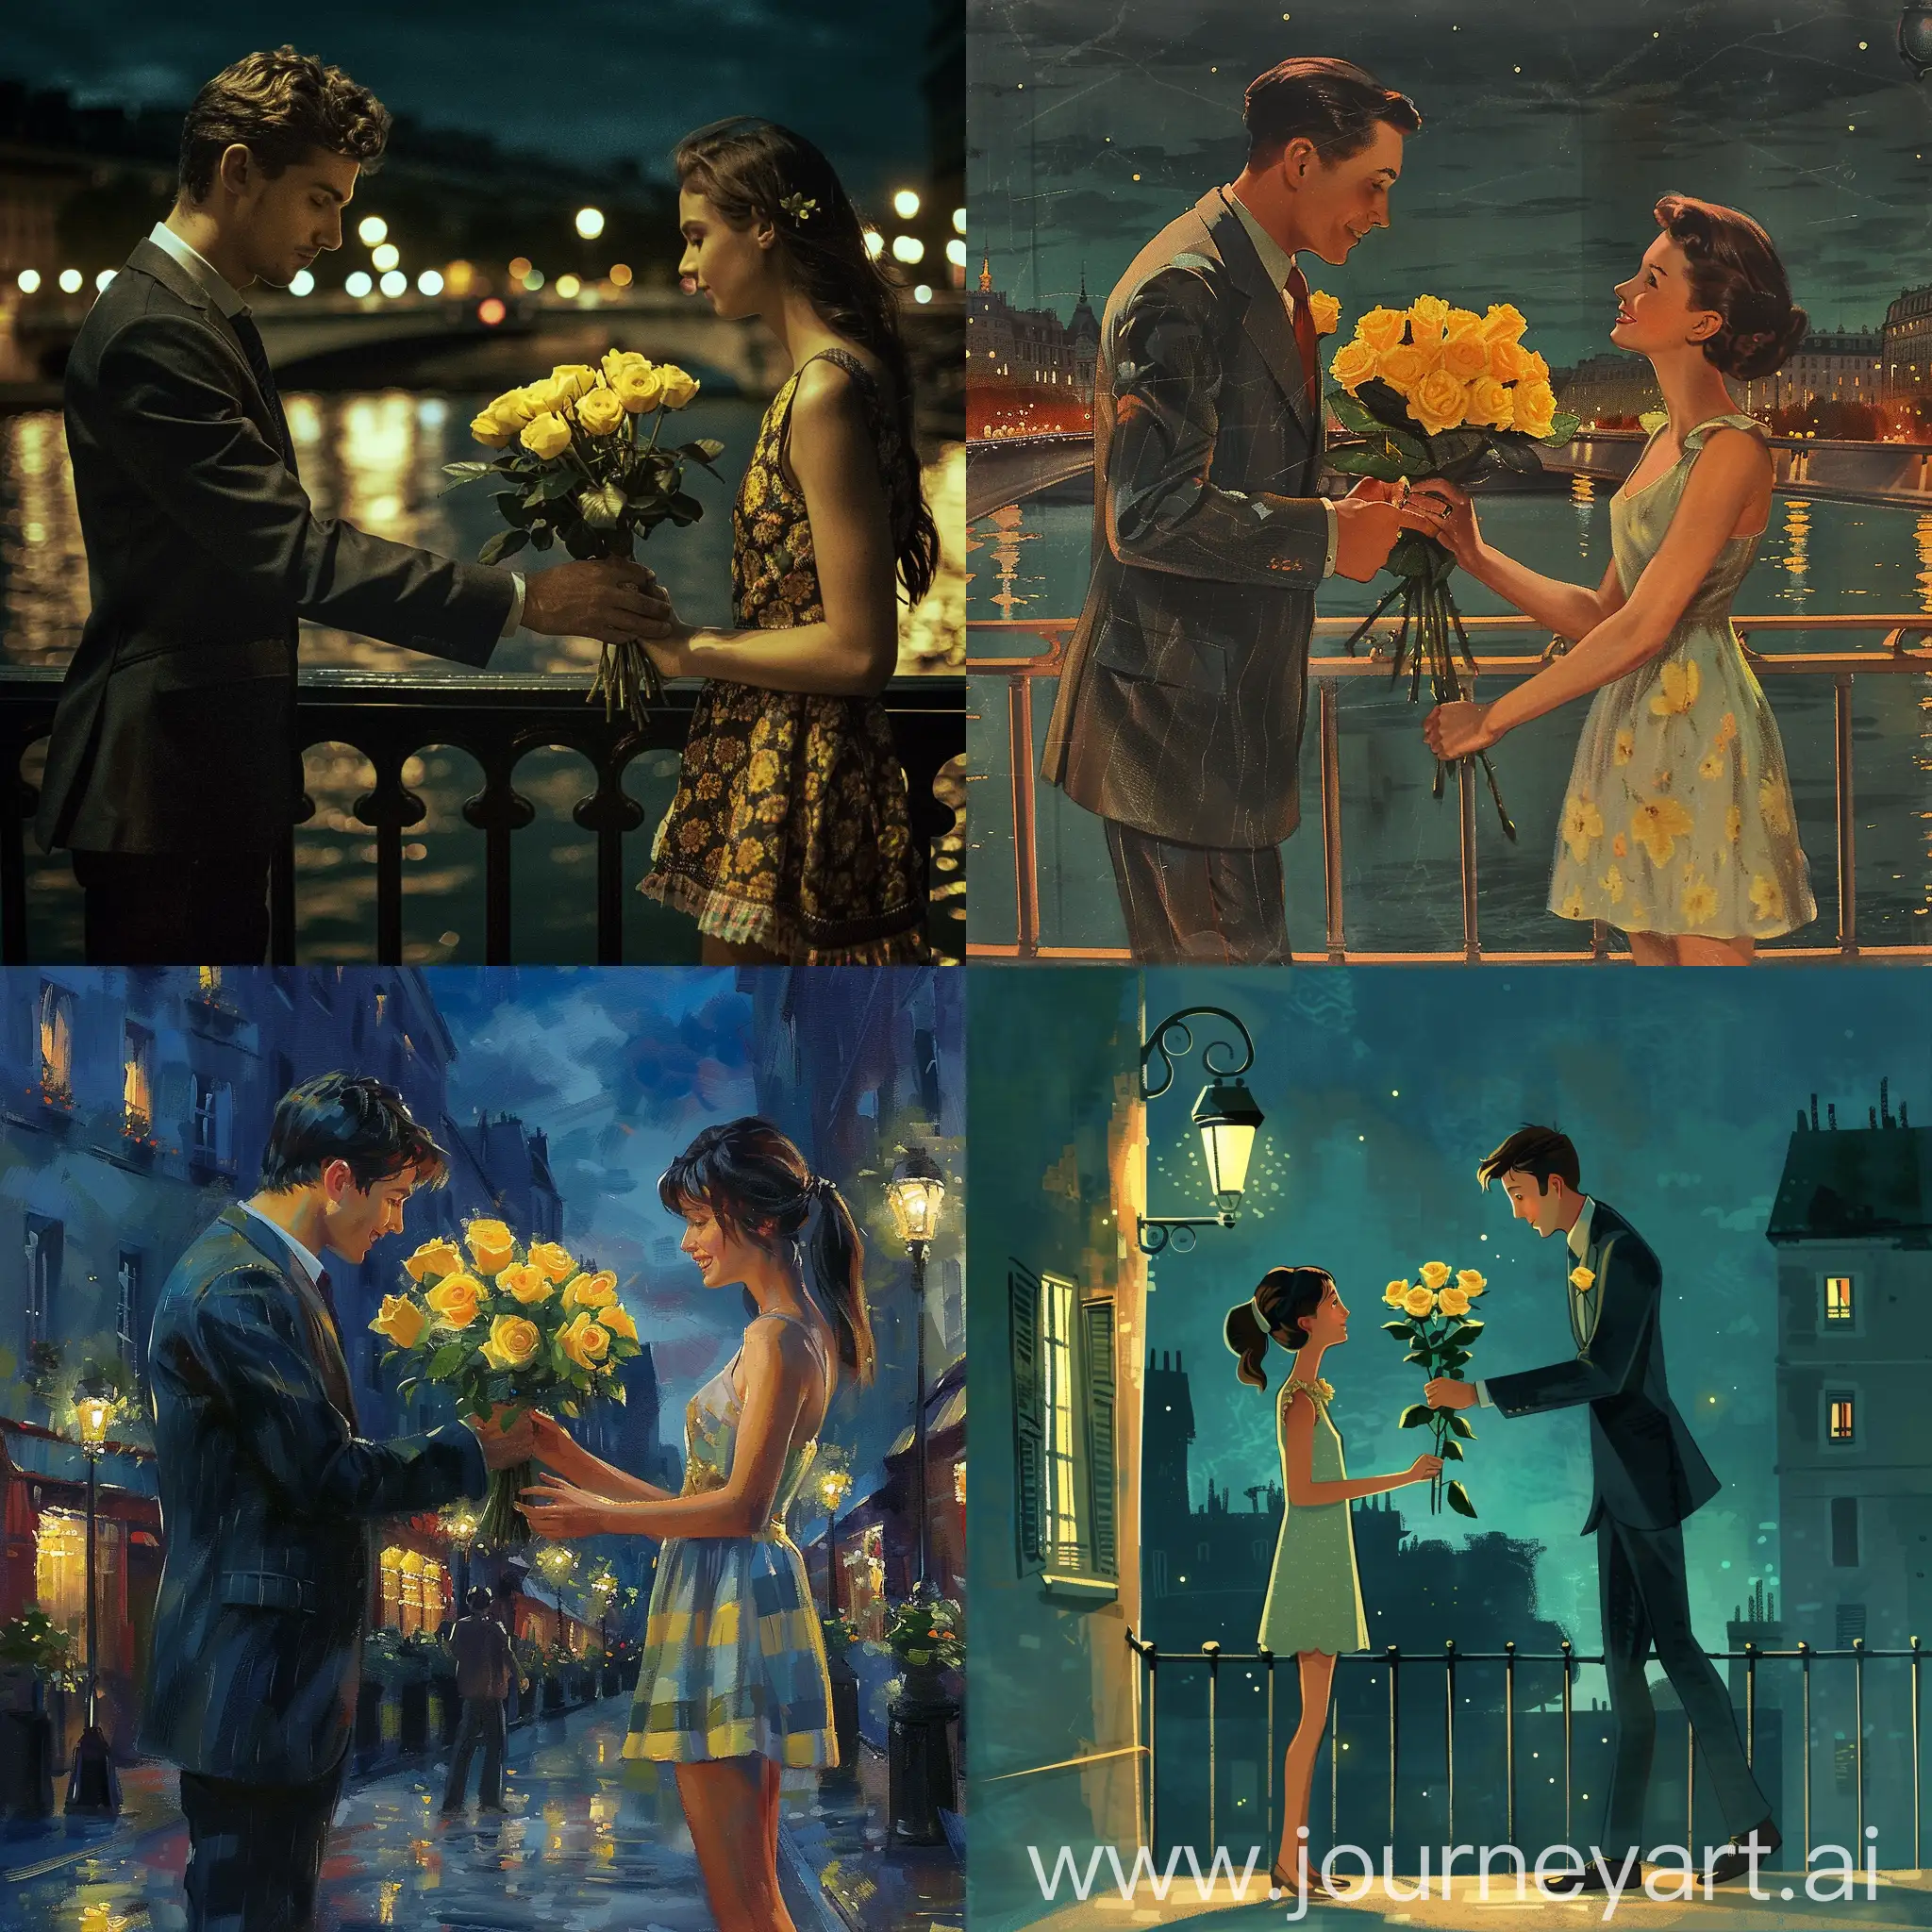 Romantic-Gesture-Gentleman-Presenting-Bouquet-of-Yellow-Roses-to-Woman-in-Summer-Dress-Paris-Night-Scene